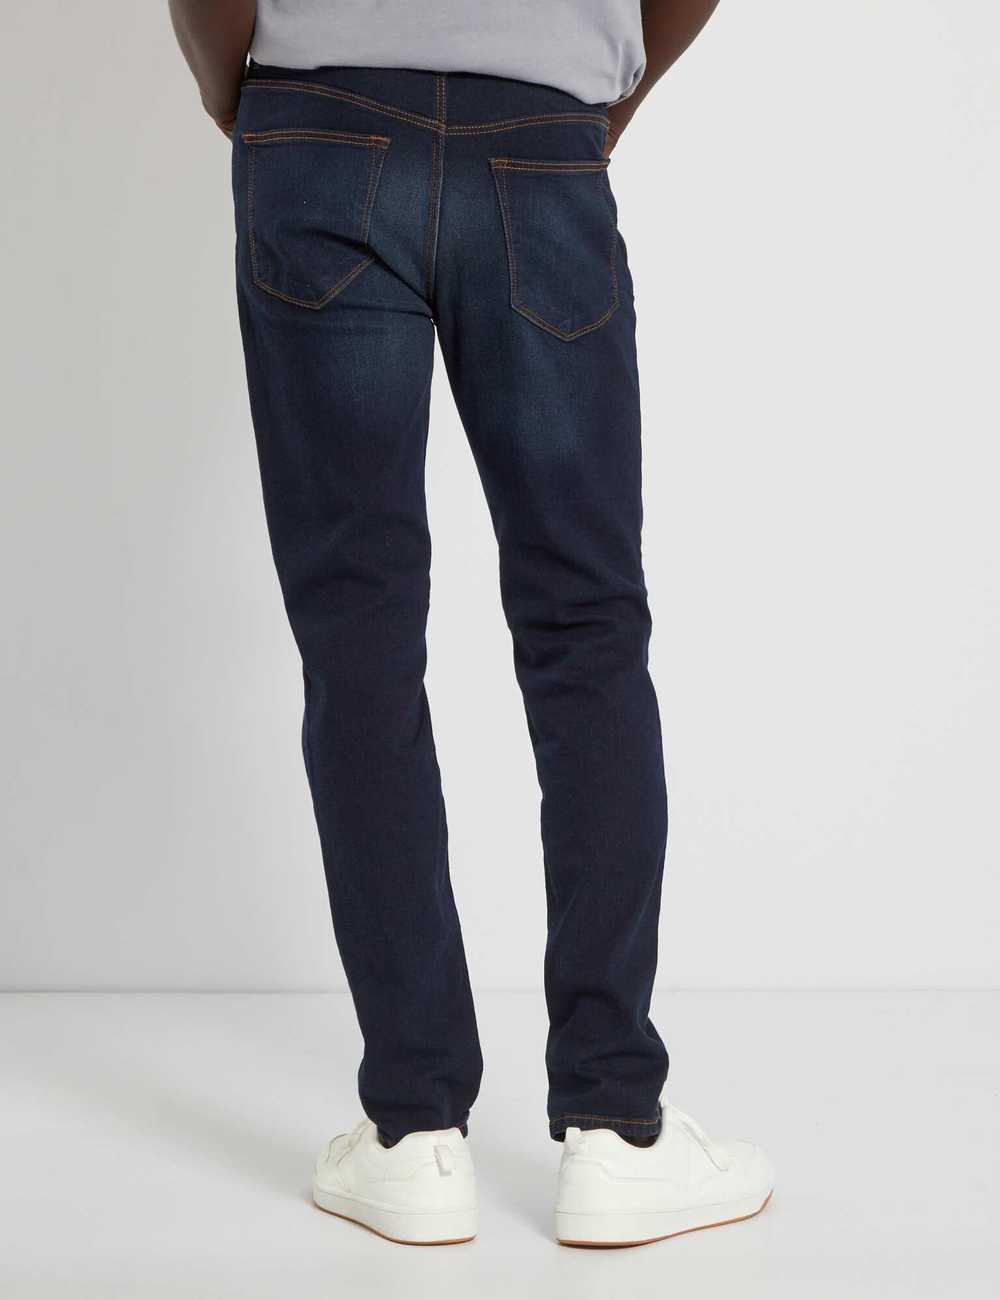 Buy Slim-fit L32 jeans Online in Dubai & the UAE|Kiabi